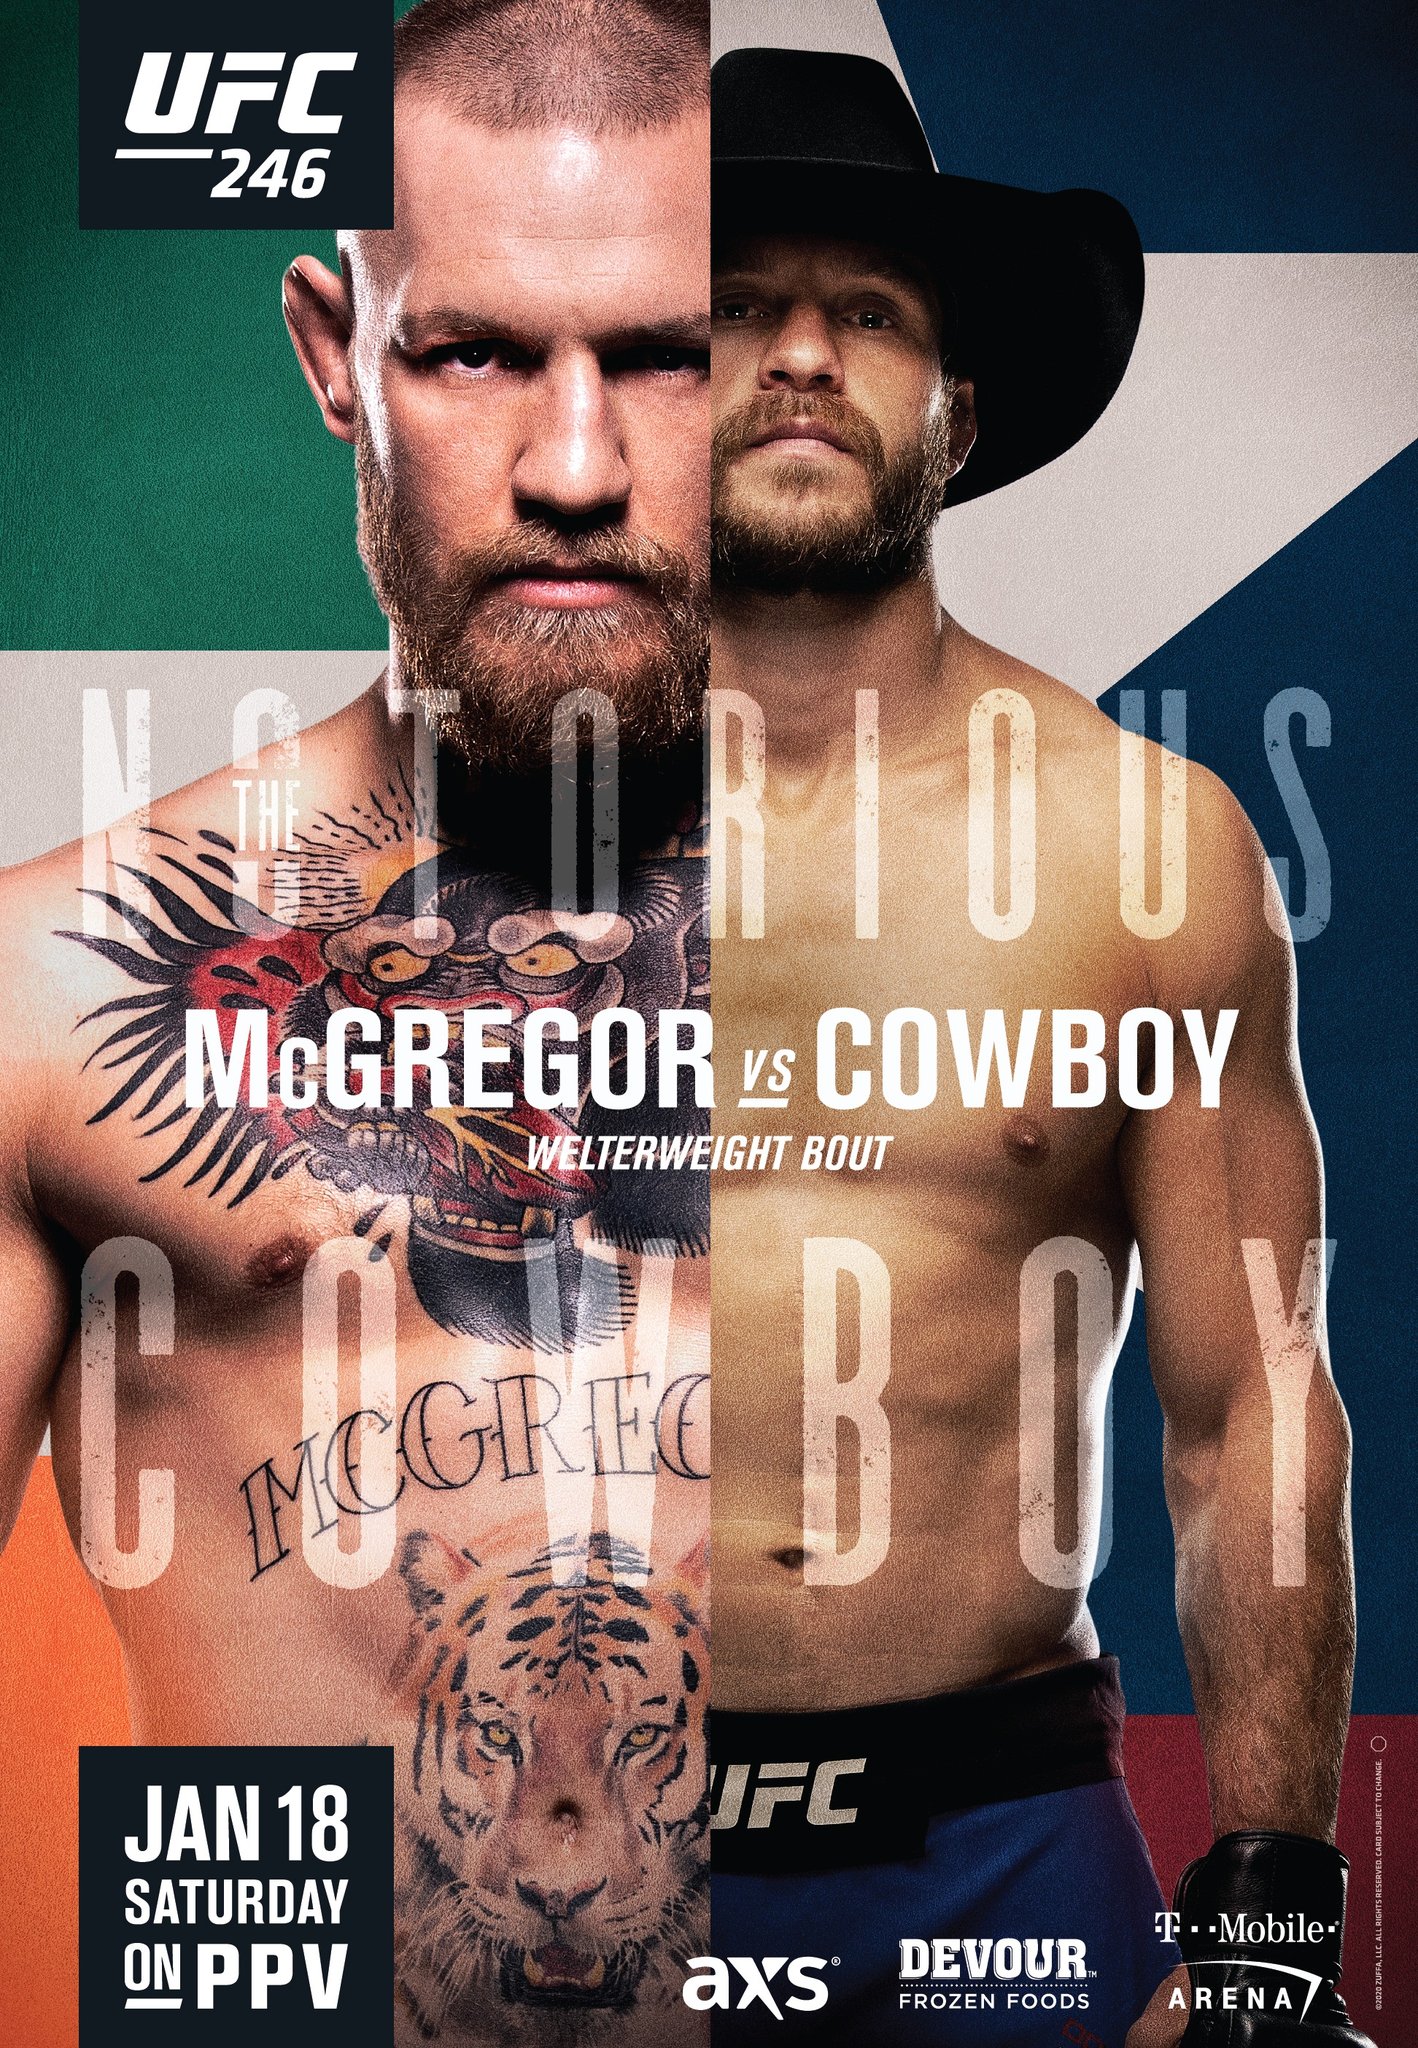 UFC 246 -  Poster affiche